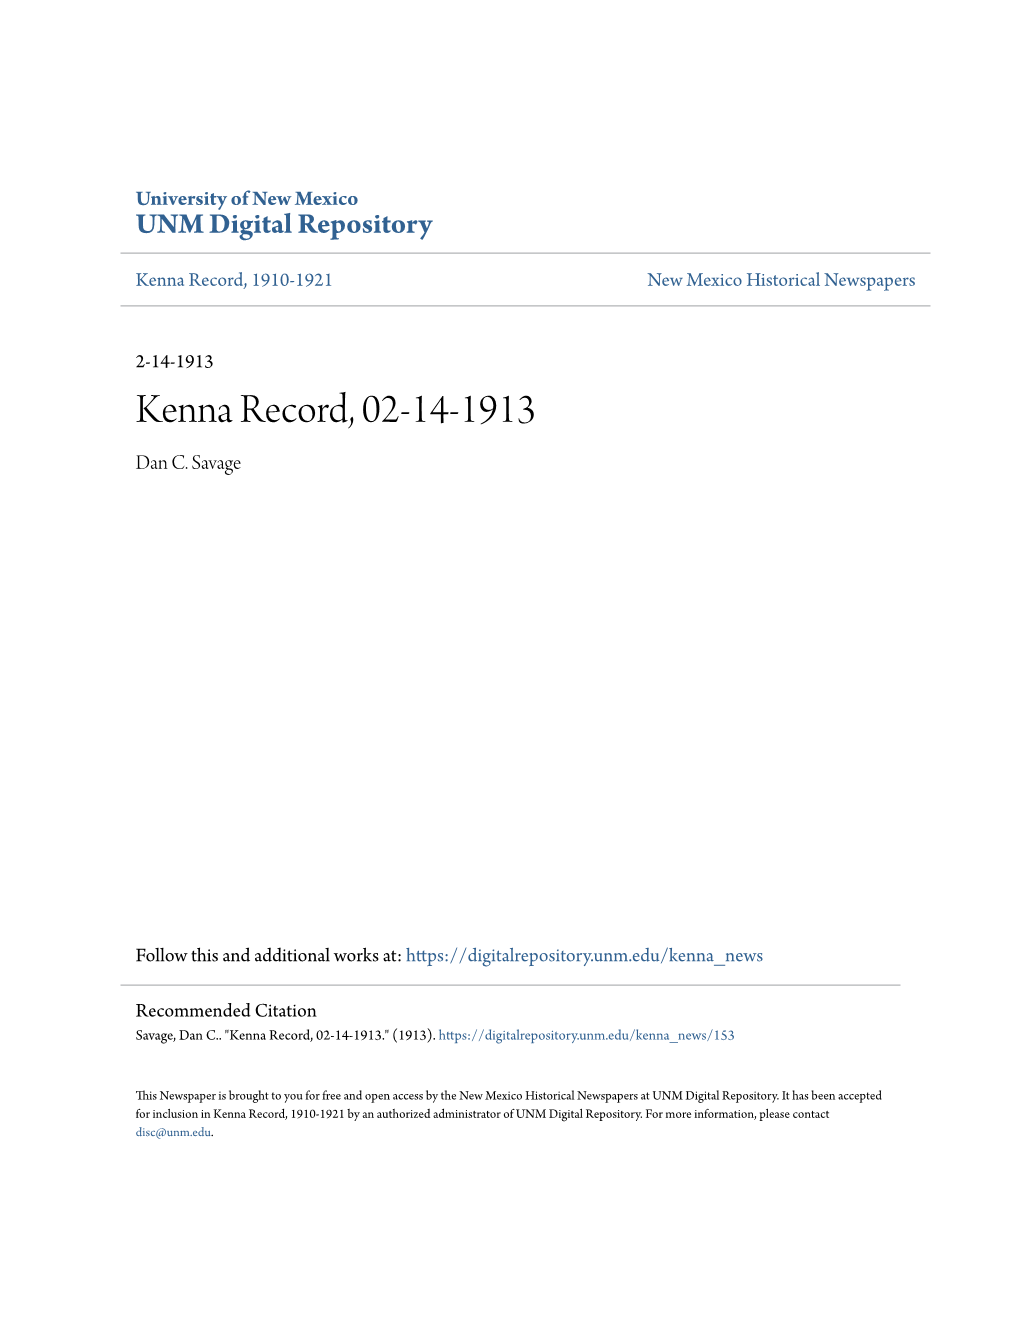 Kenna Record, 02-14-1913 Dan C